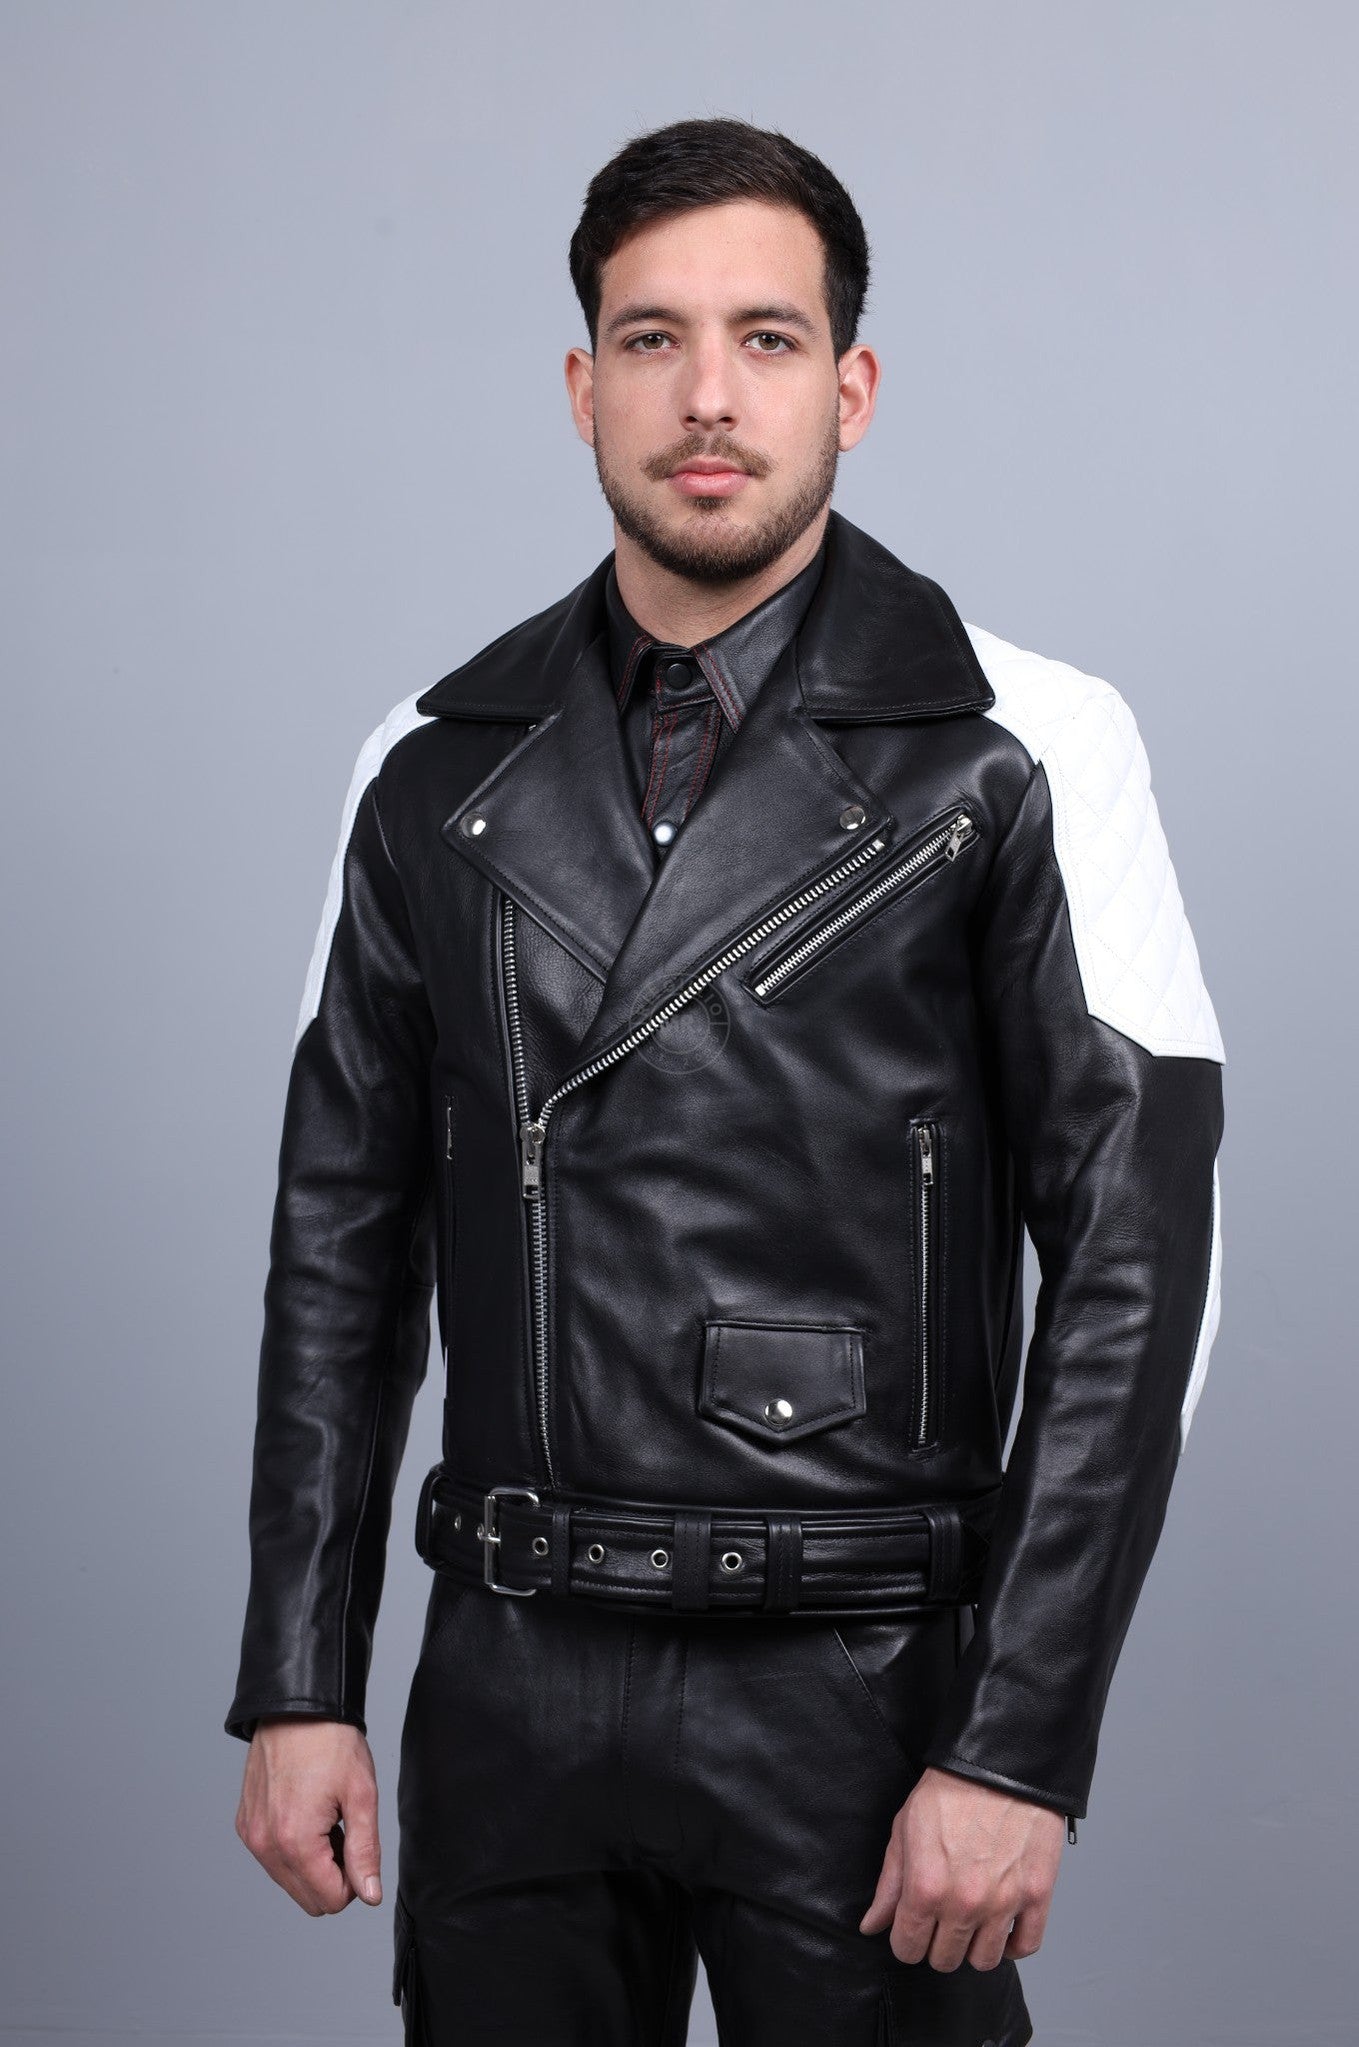 Leather Brando Jacket - White Padding at MR. Riegillio